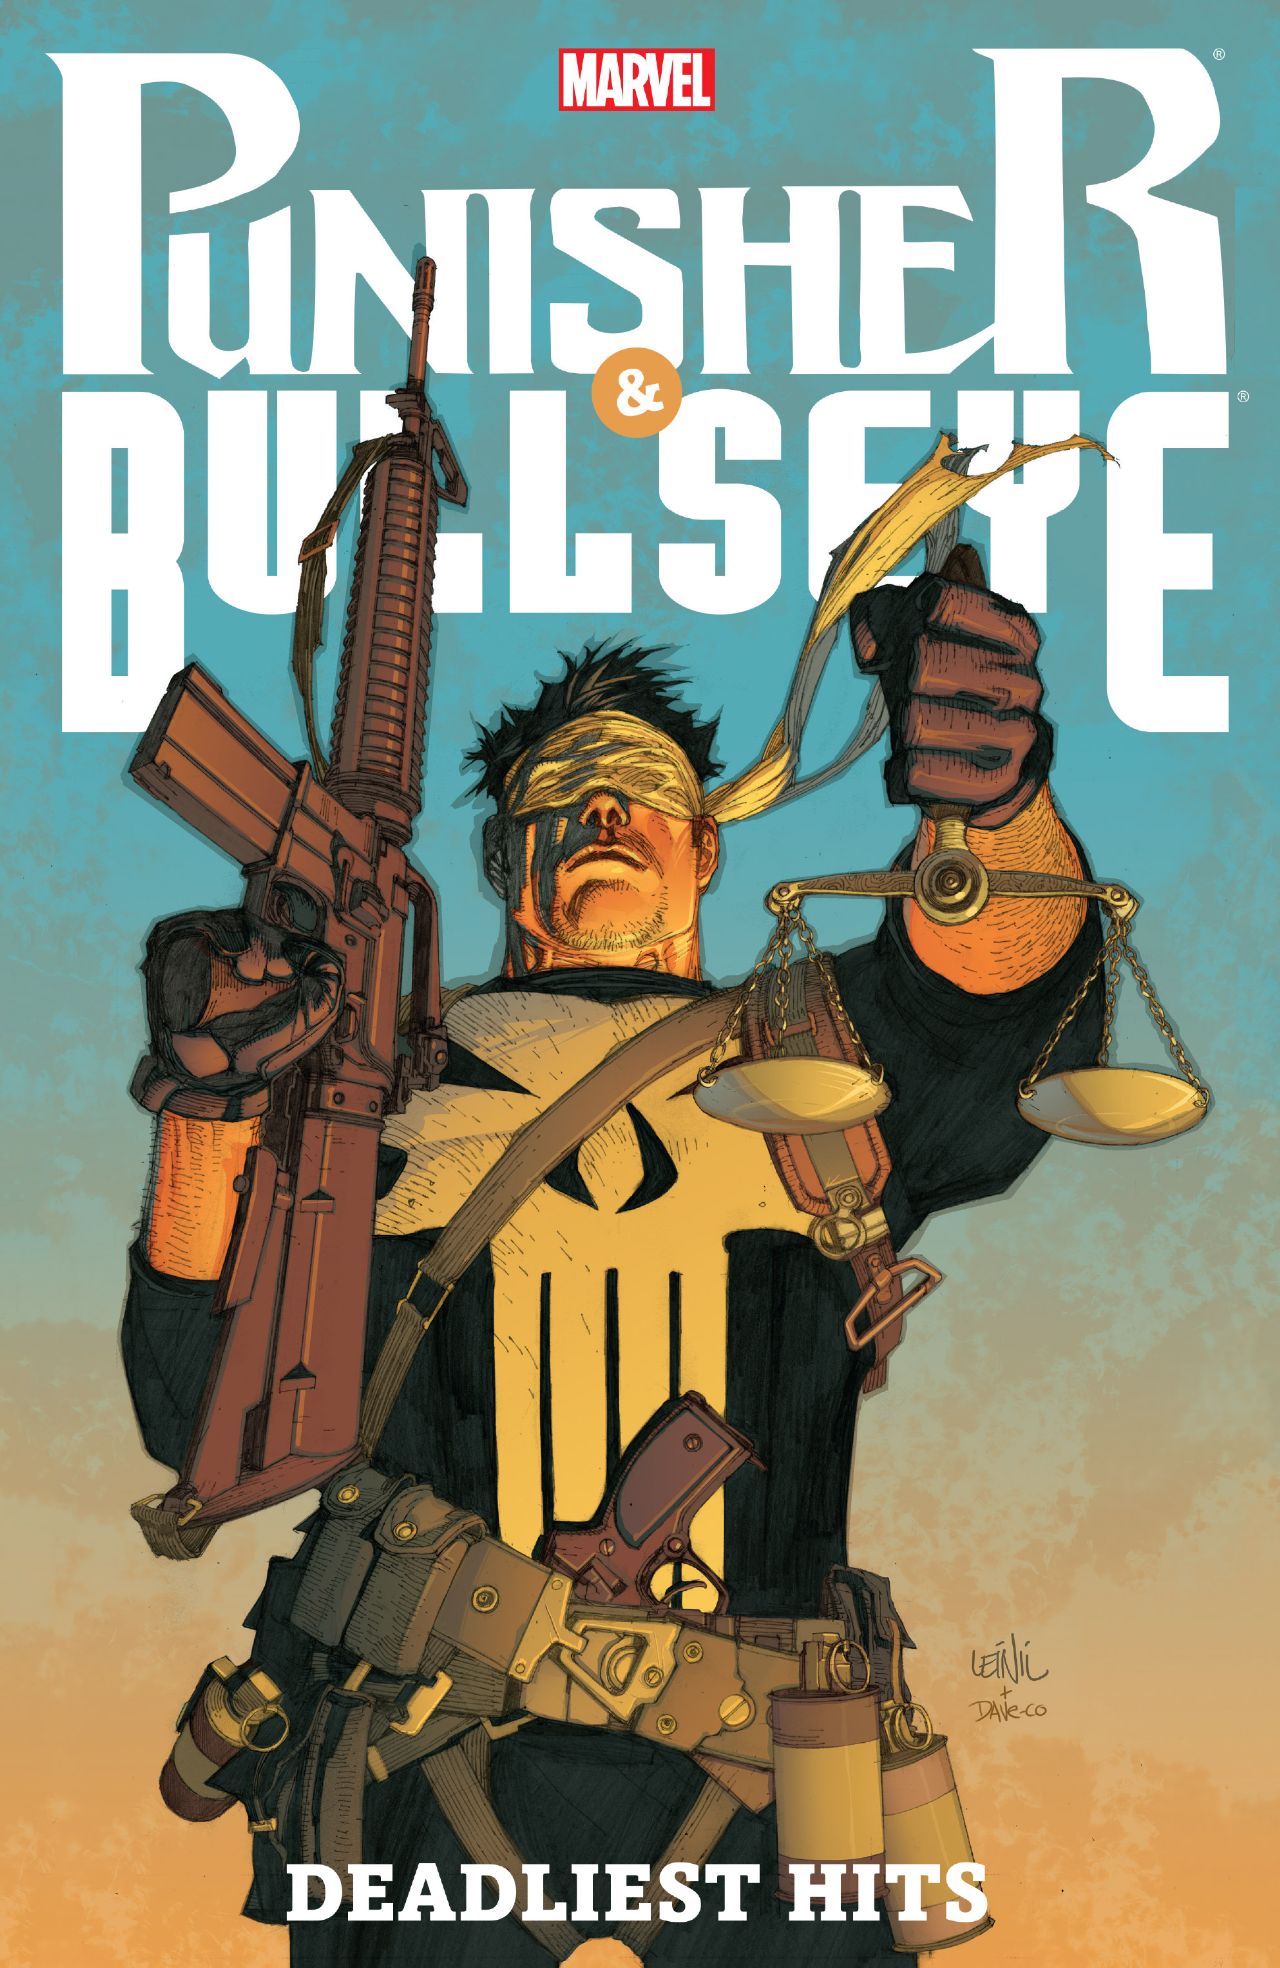 Punisher & Bullseye: Deadliest Hits Review